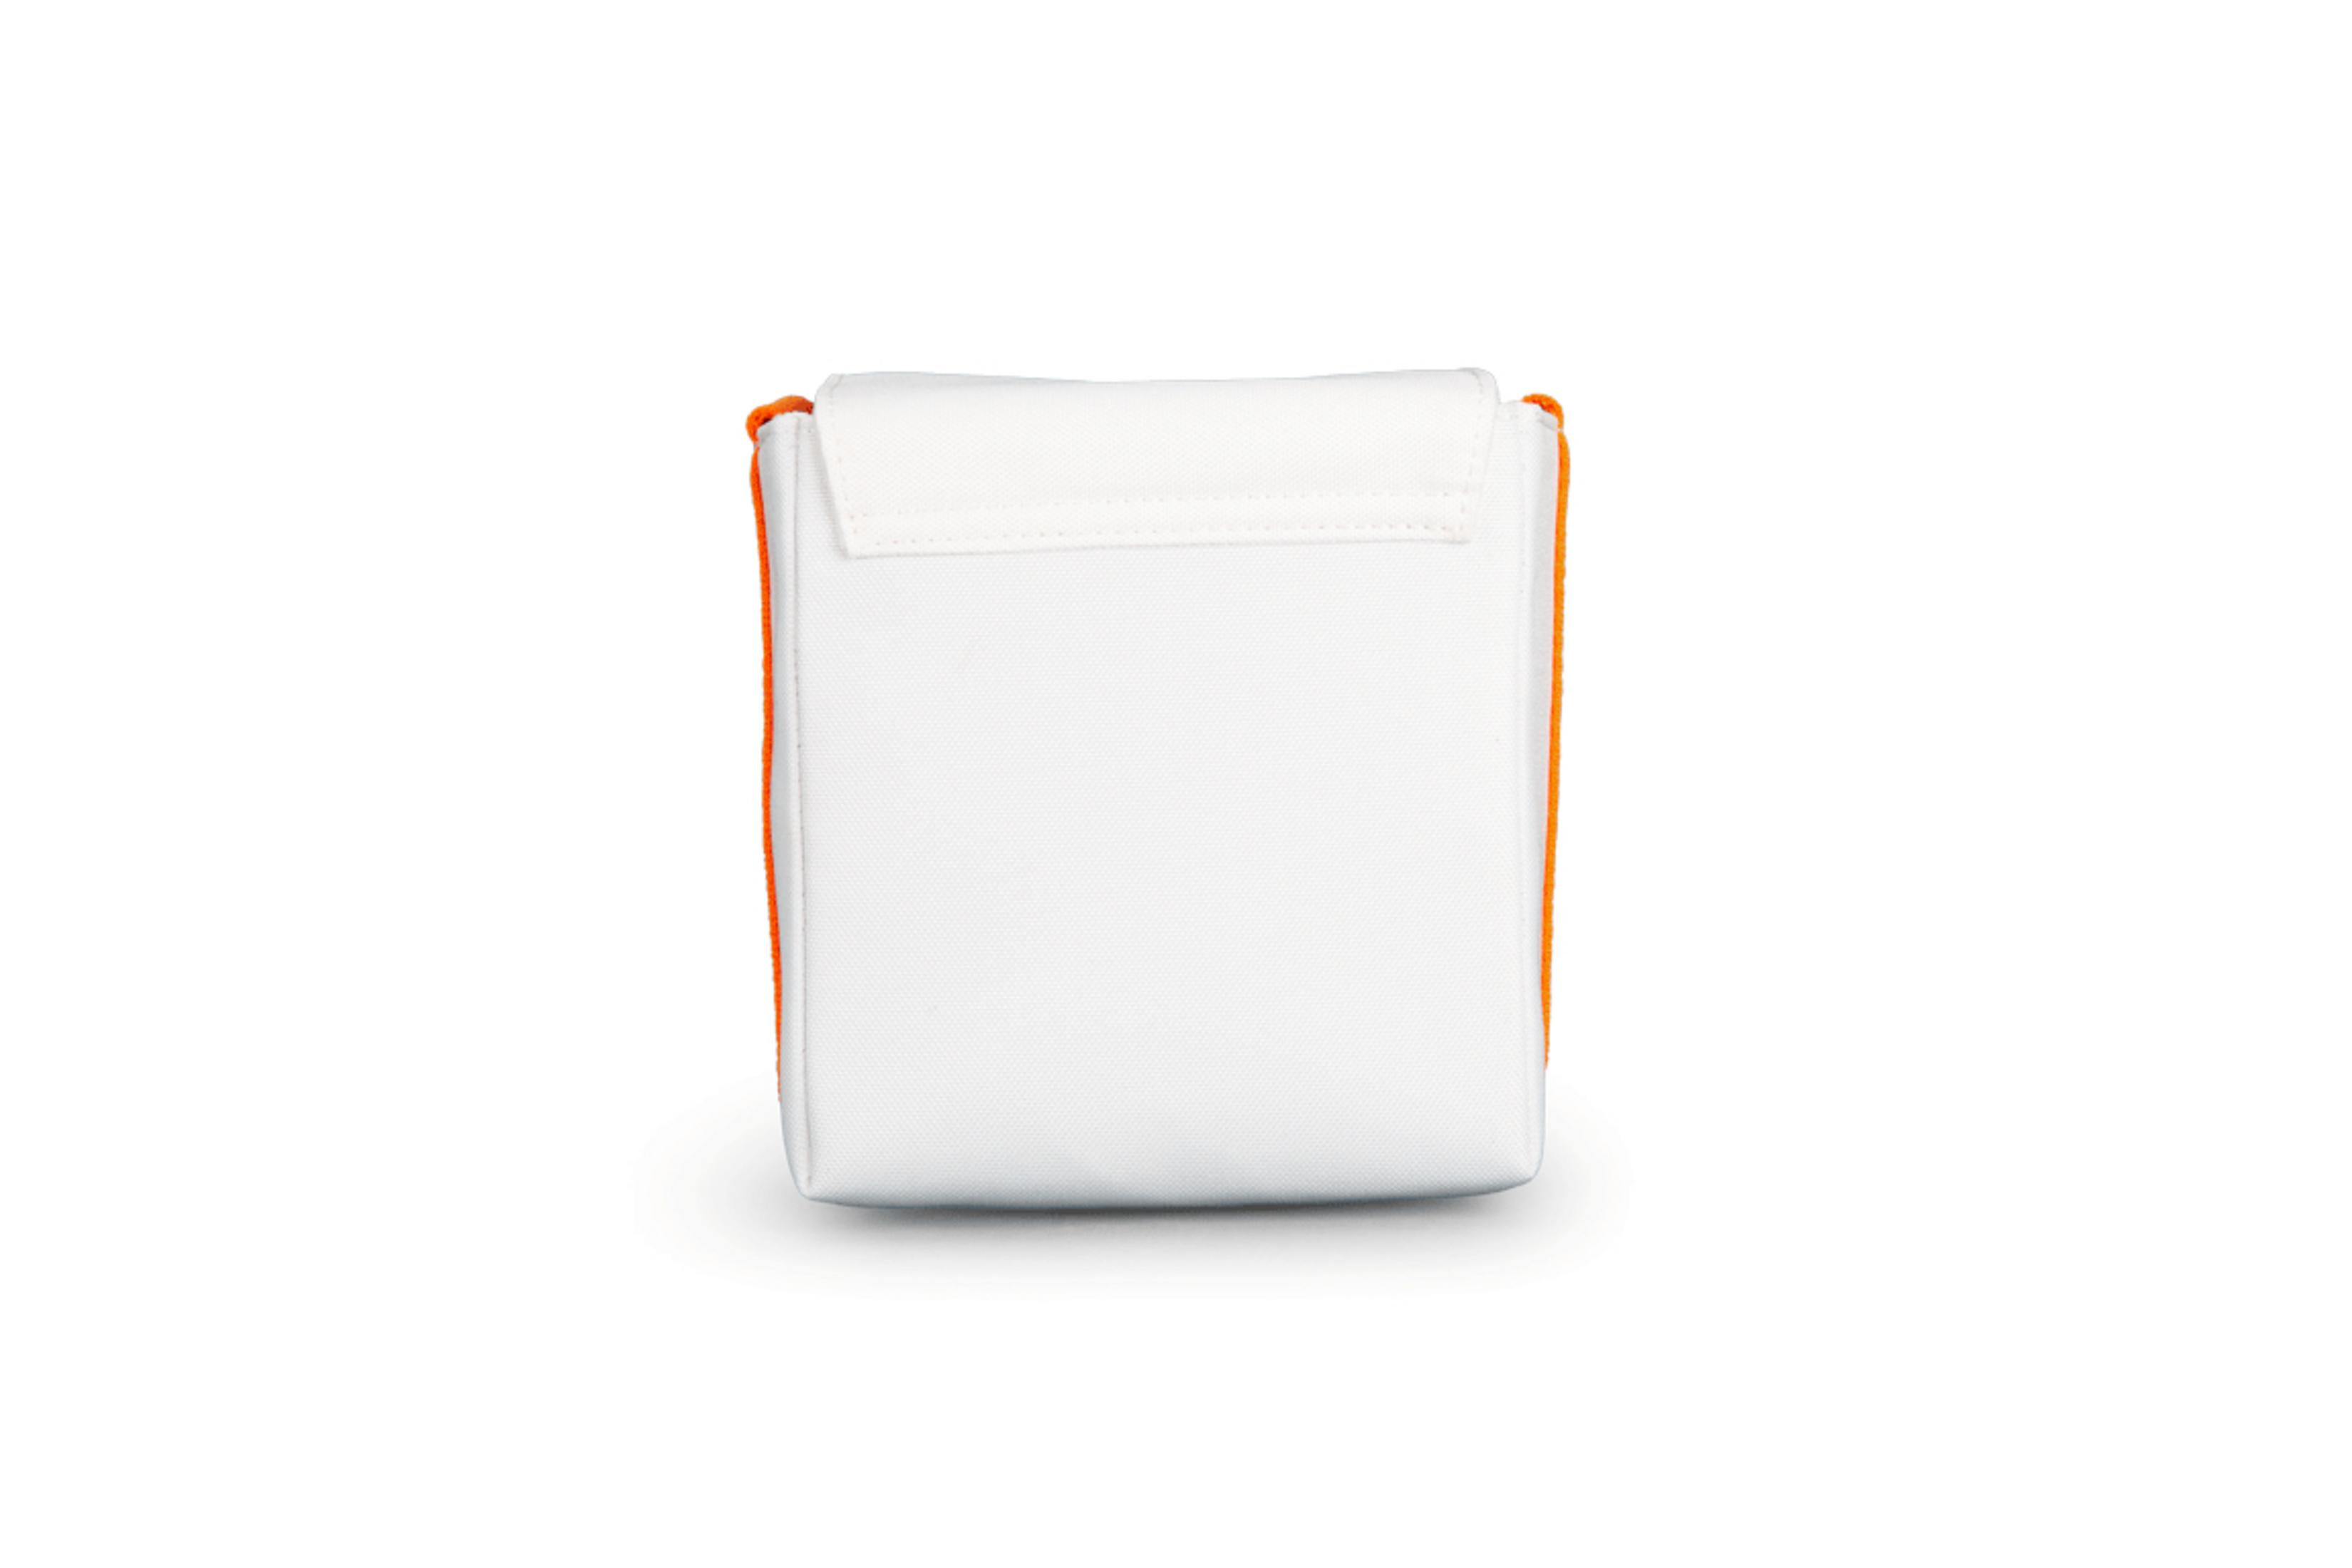 NOW BAG ORANGE & 6101 WHITE Kameratasche, POLAROID Weiß/Orange